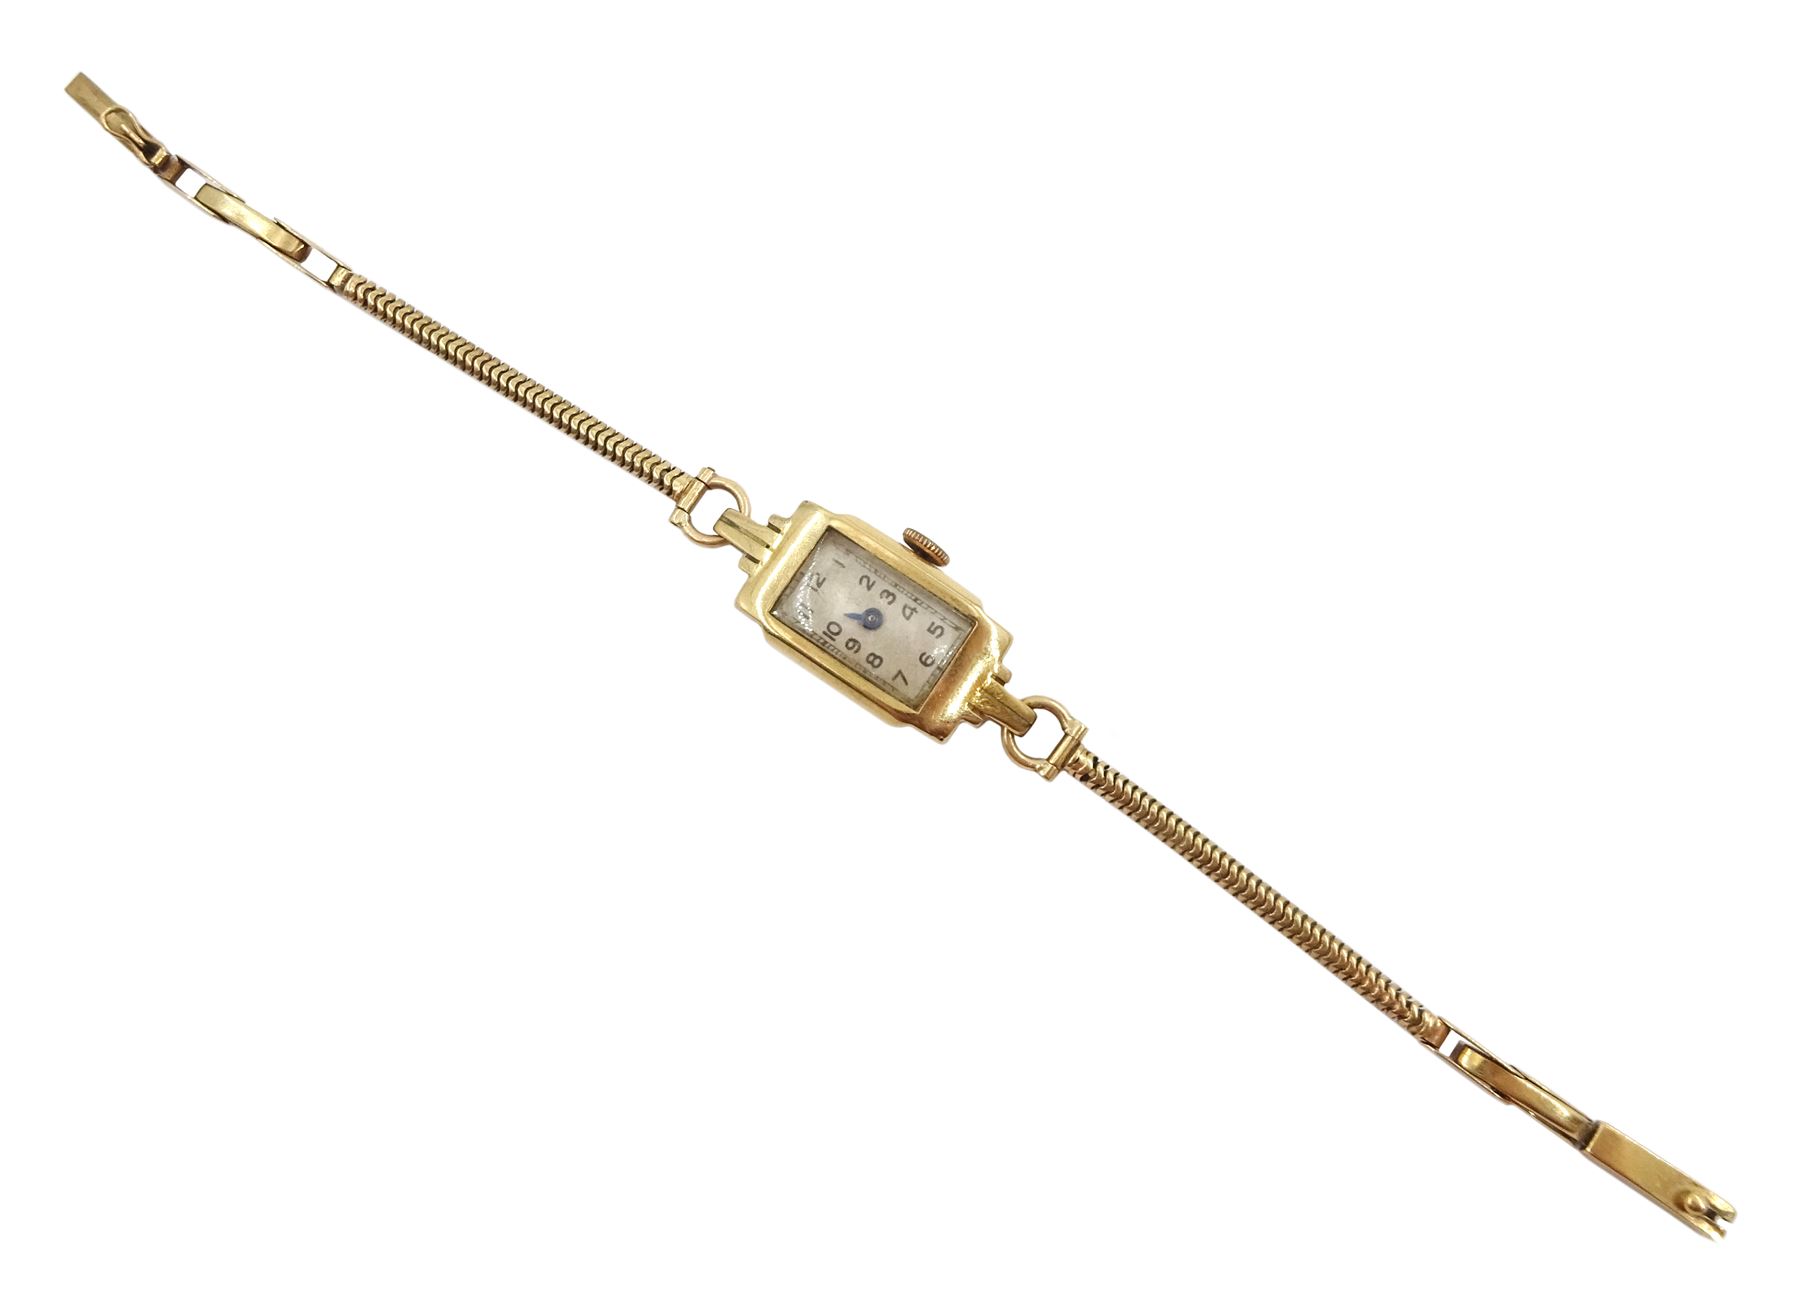 9ct gold ladies manual wind bracelet wristwatch - Image 3 of 3